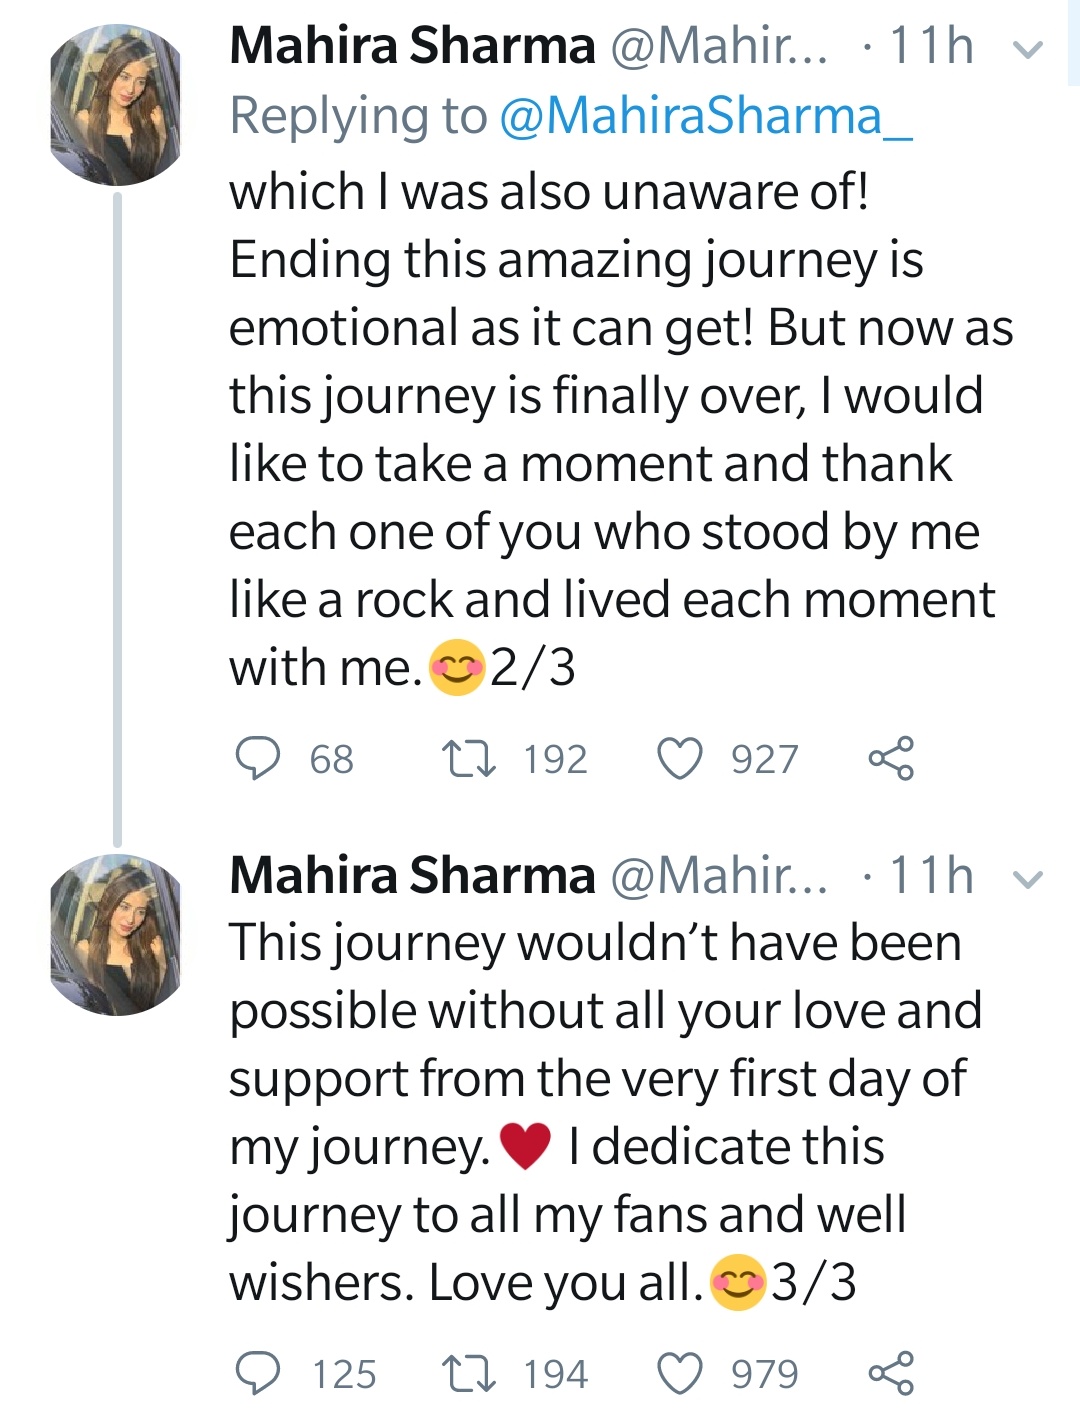 Bidding adieu to Bigg Boss 13 is emotional: Mahira Sharma 1